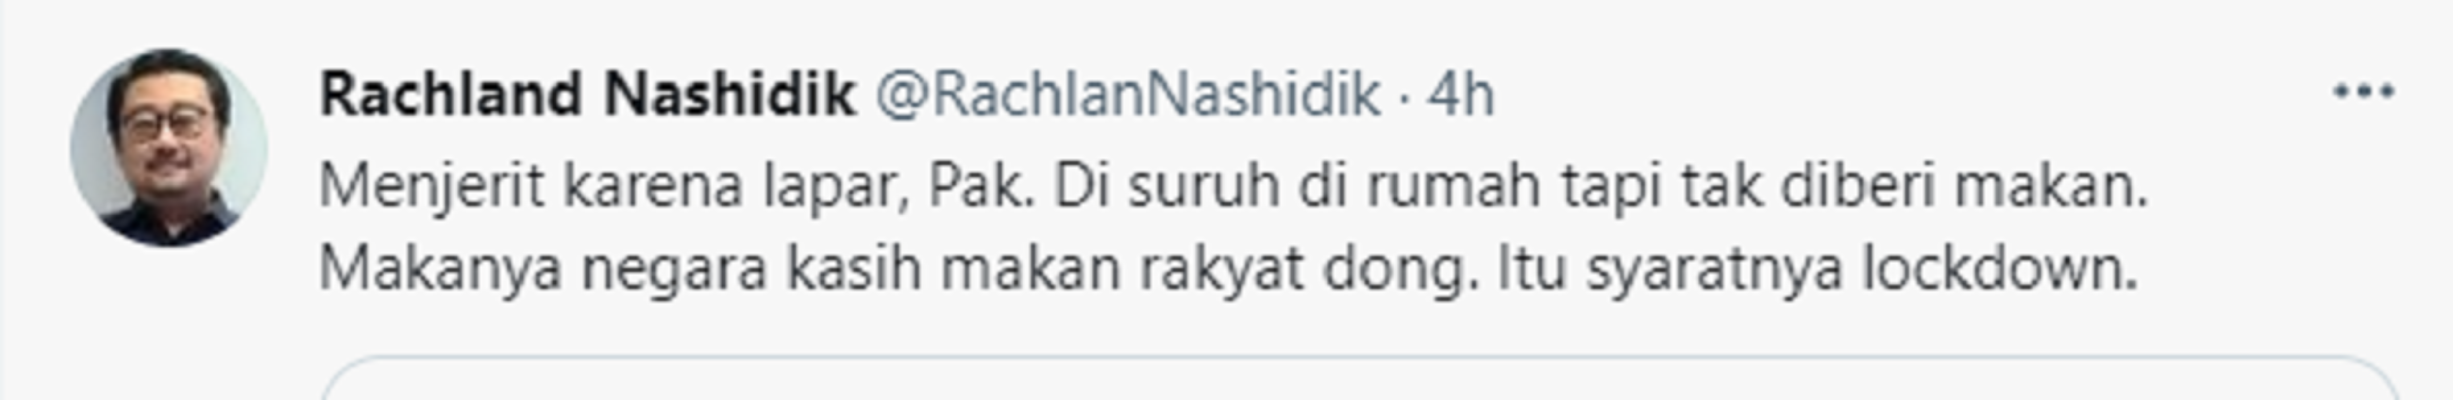 Cuitan Rachland Nashidik soal keputusan Jokowi tidak lockdown Indonesia.